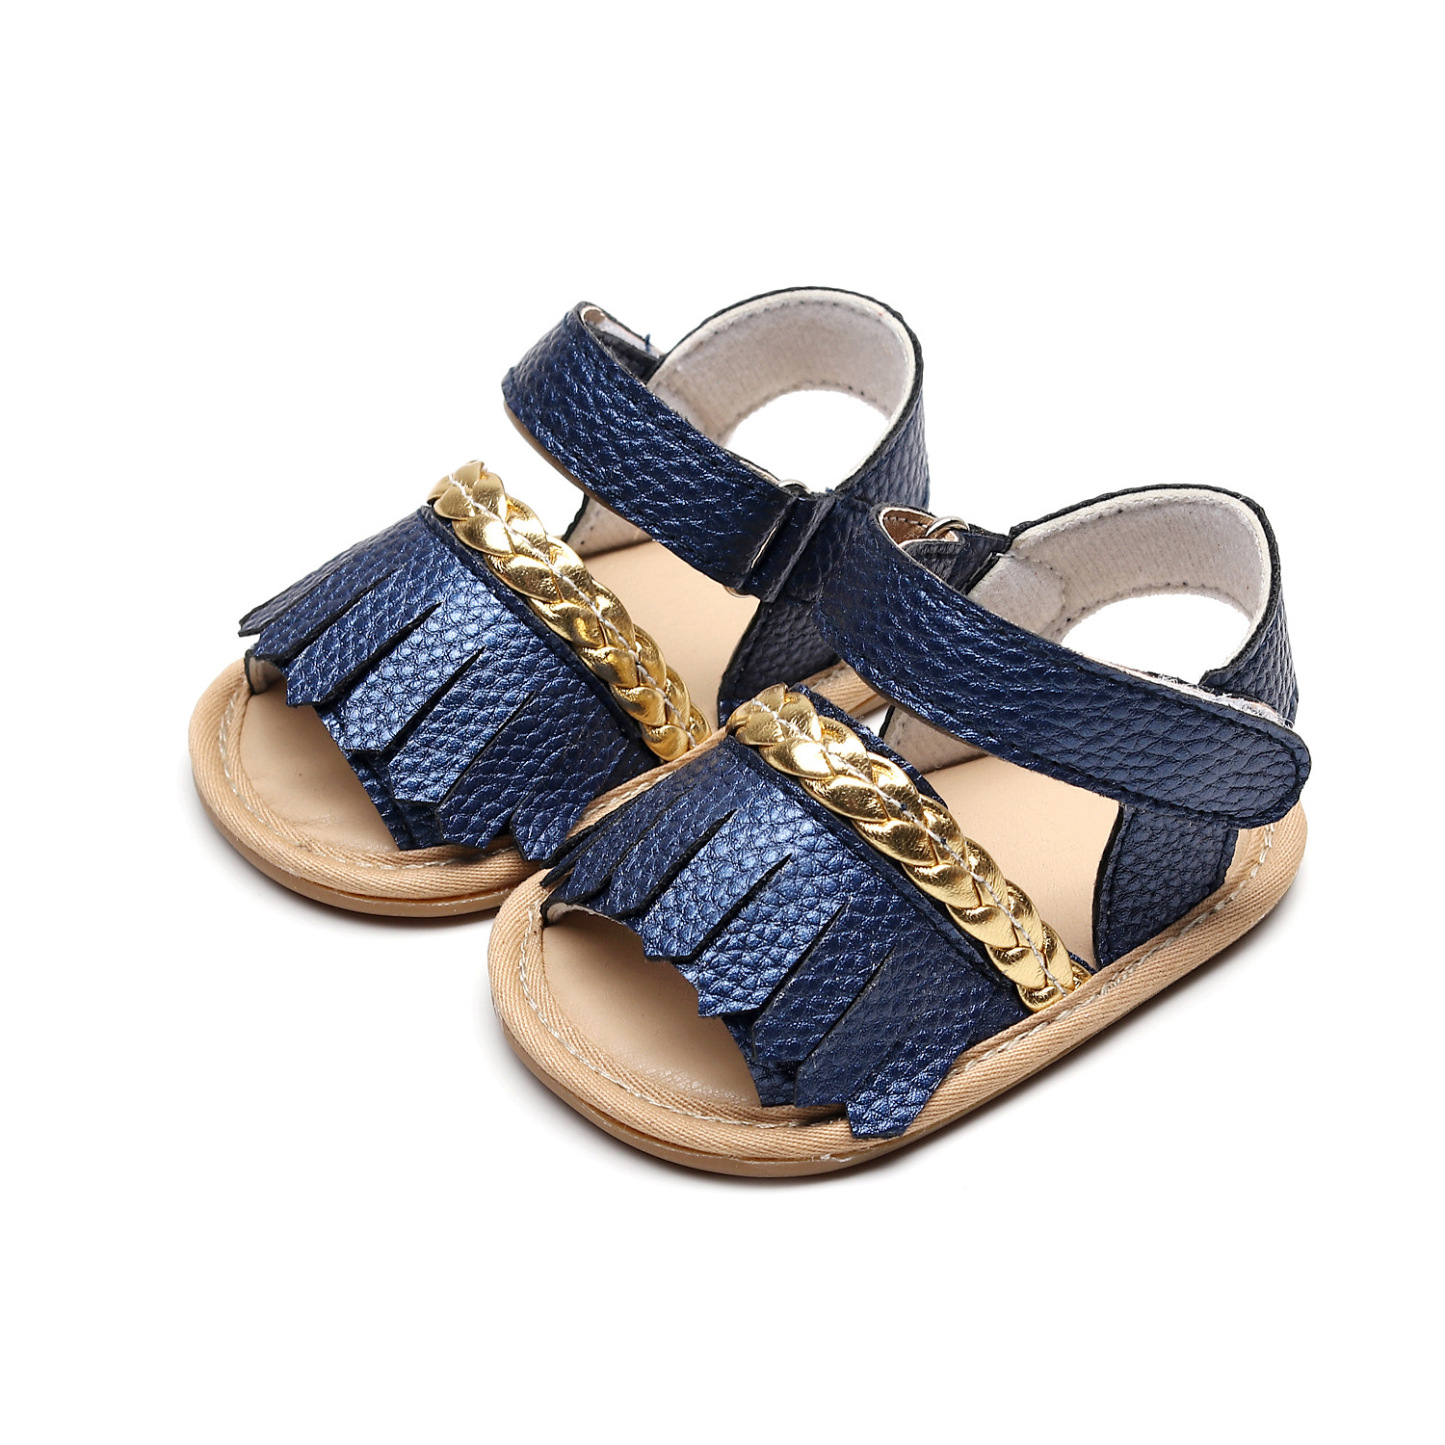 Tassel Sandals Baby Toddler Shoes